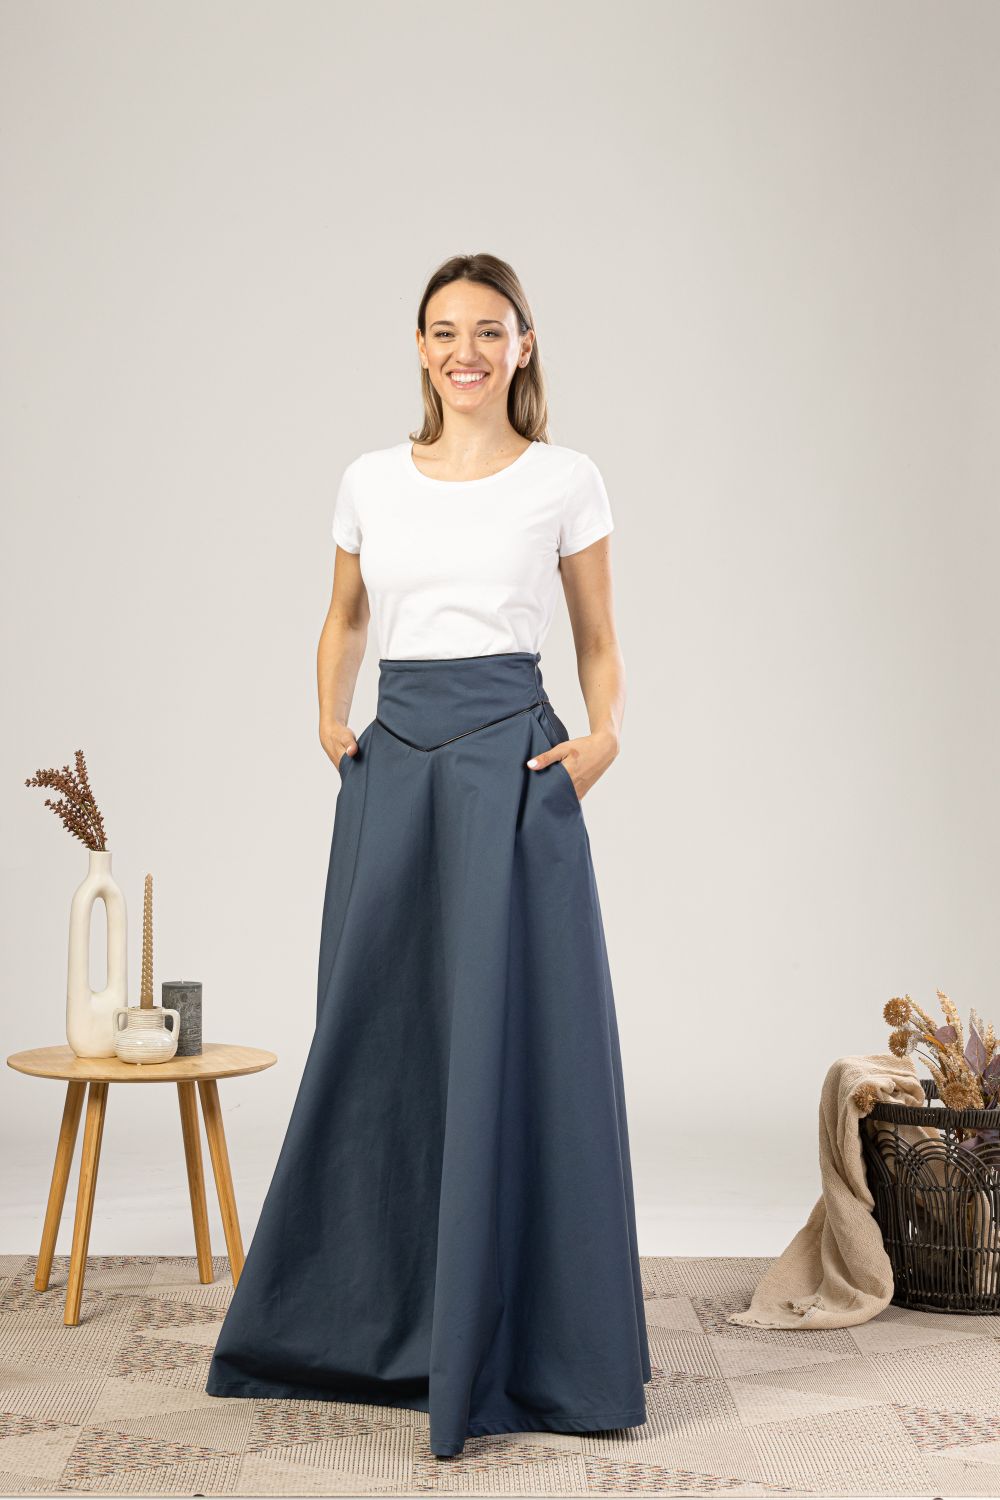 Slate Blue High Waist Victorian Skirt ideal for summer days - from NikkaPlace | Effortless fashion for easy living